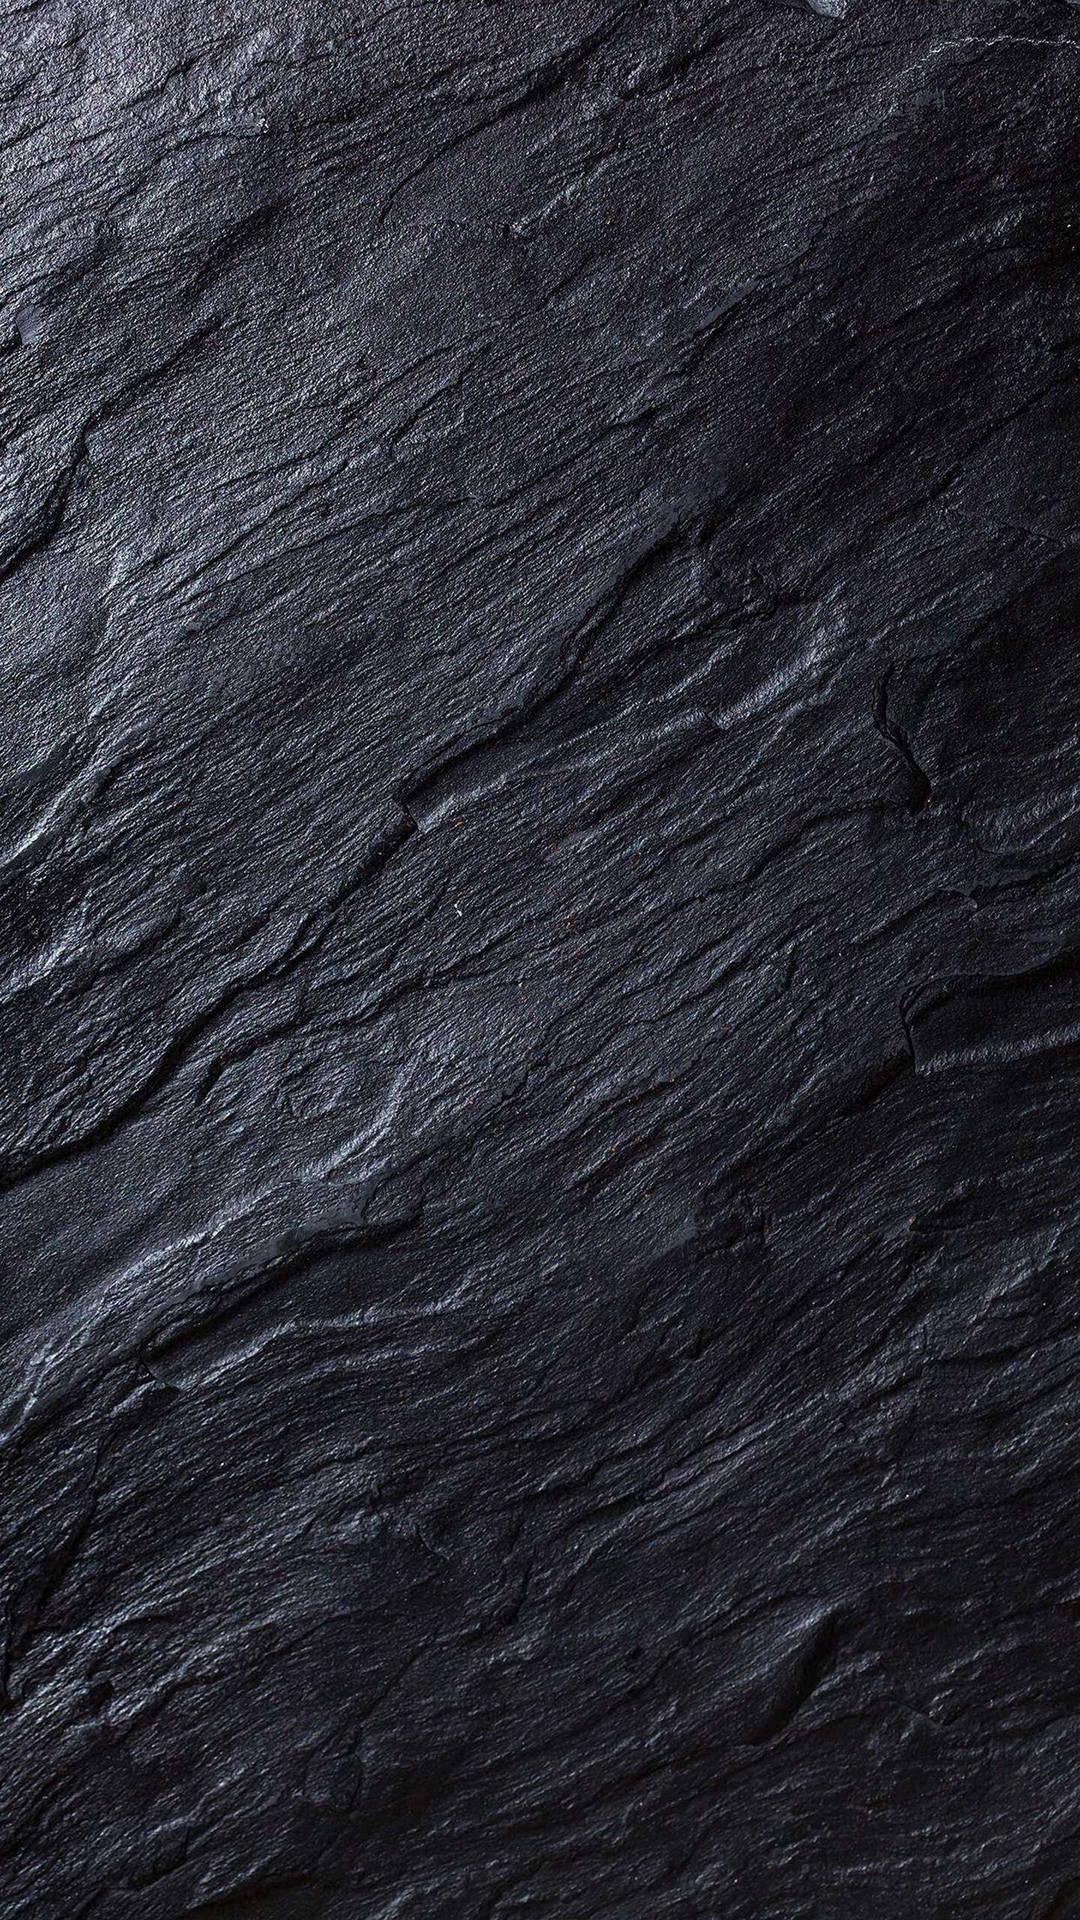 Black Iphone Rock Texture